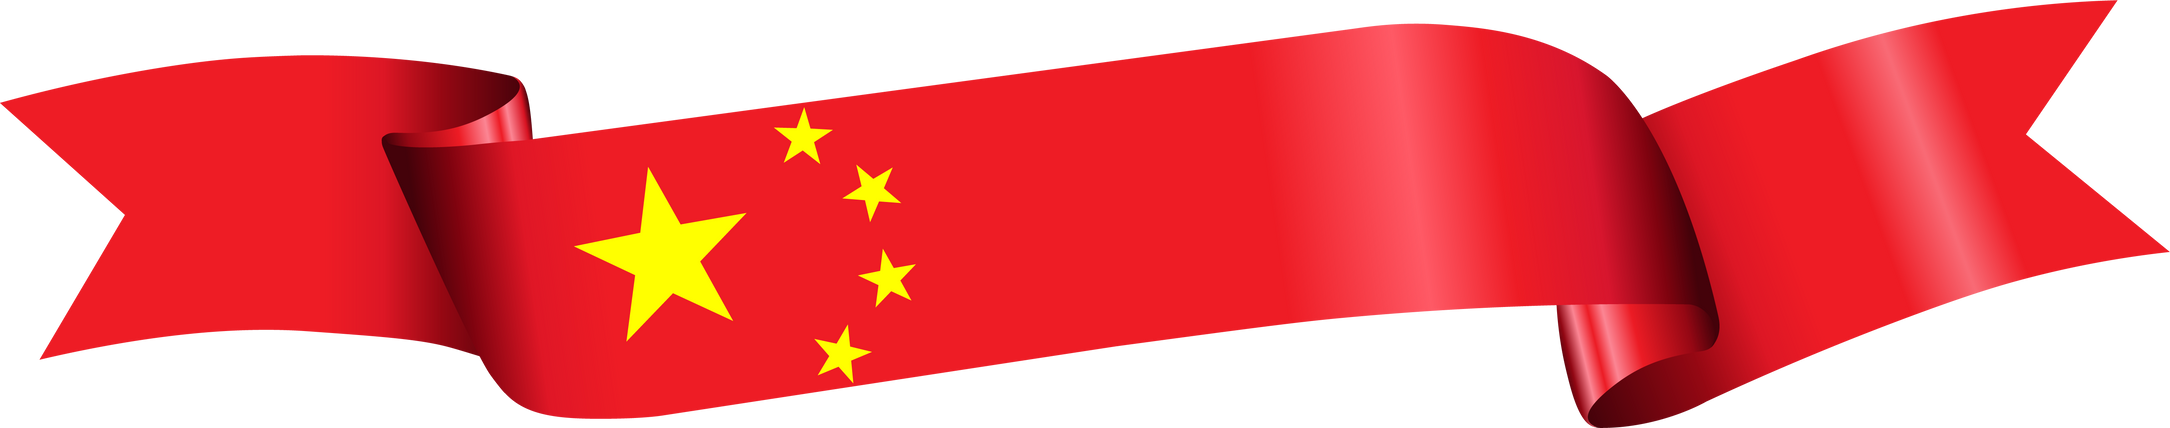 3D Flag of China on ribbon.